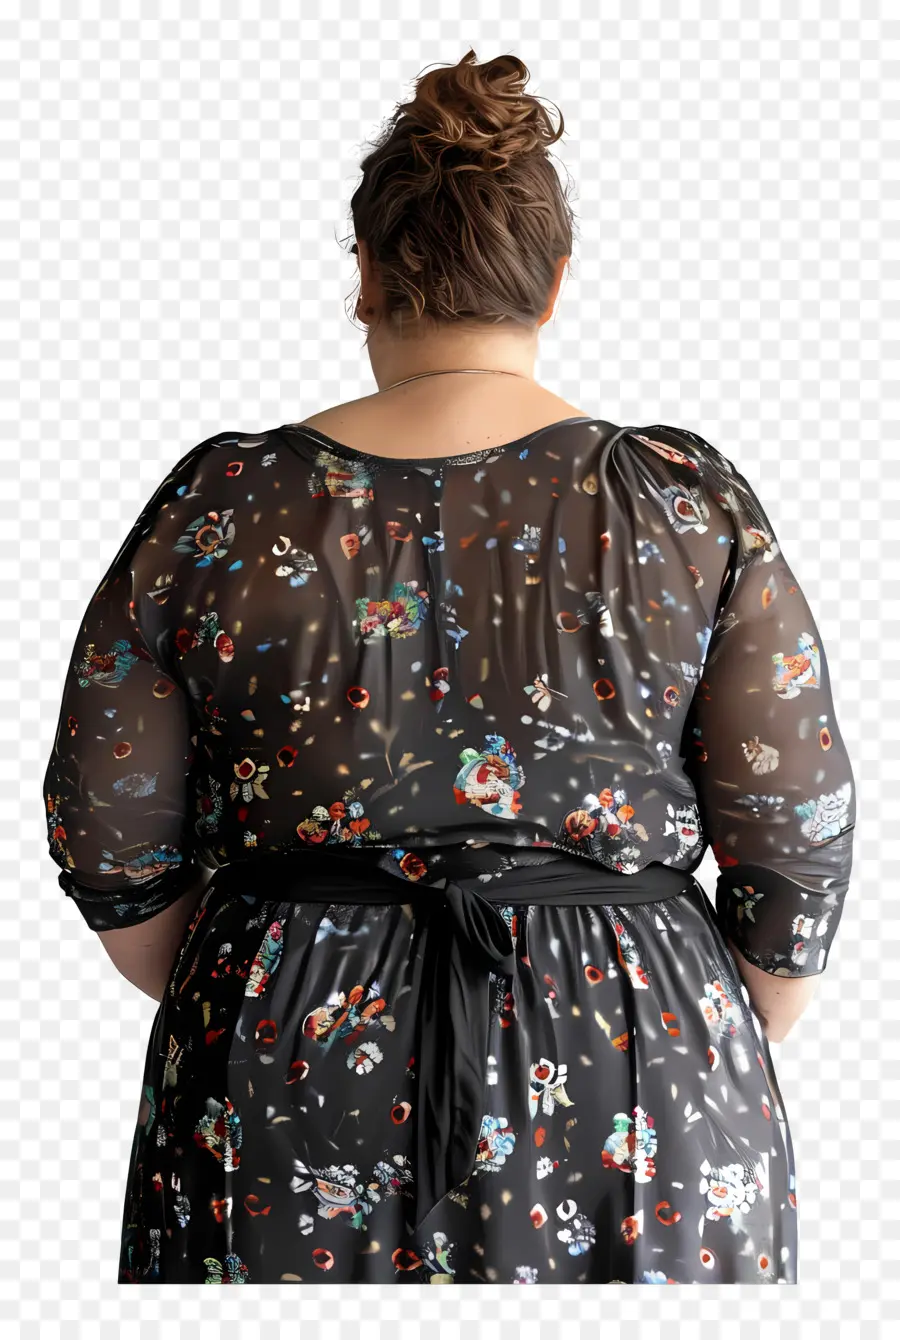 fat woman black dress floral patterns black shoes deep v-neckline